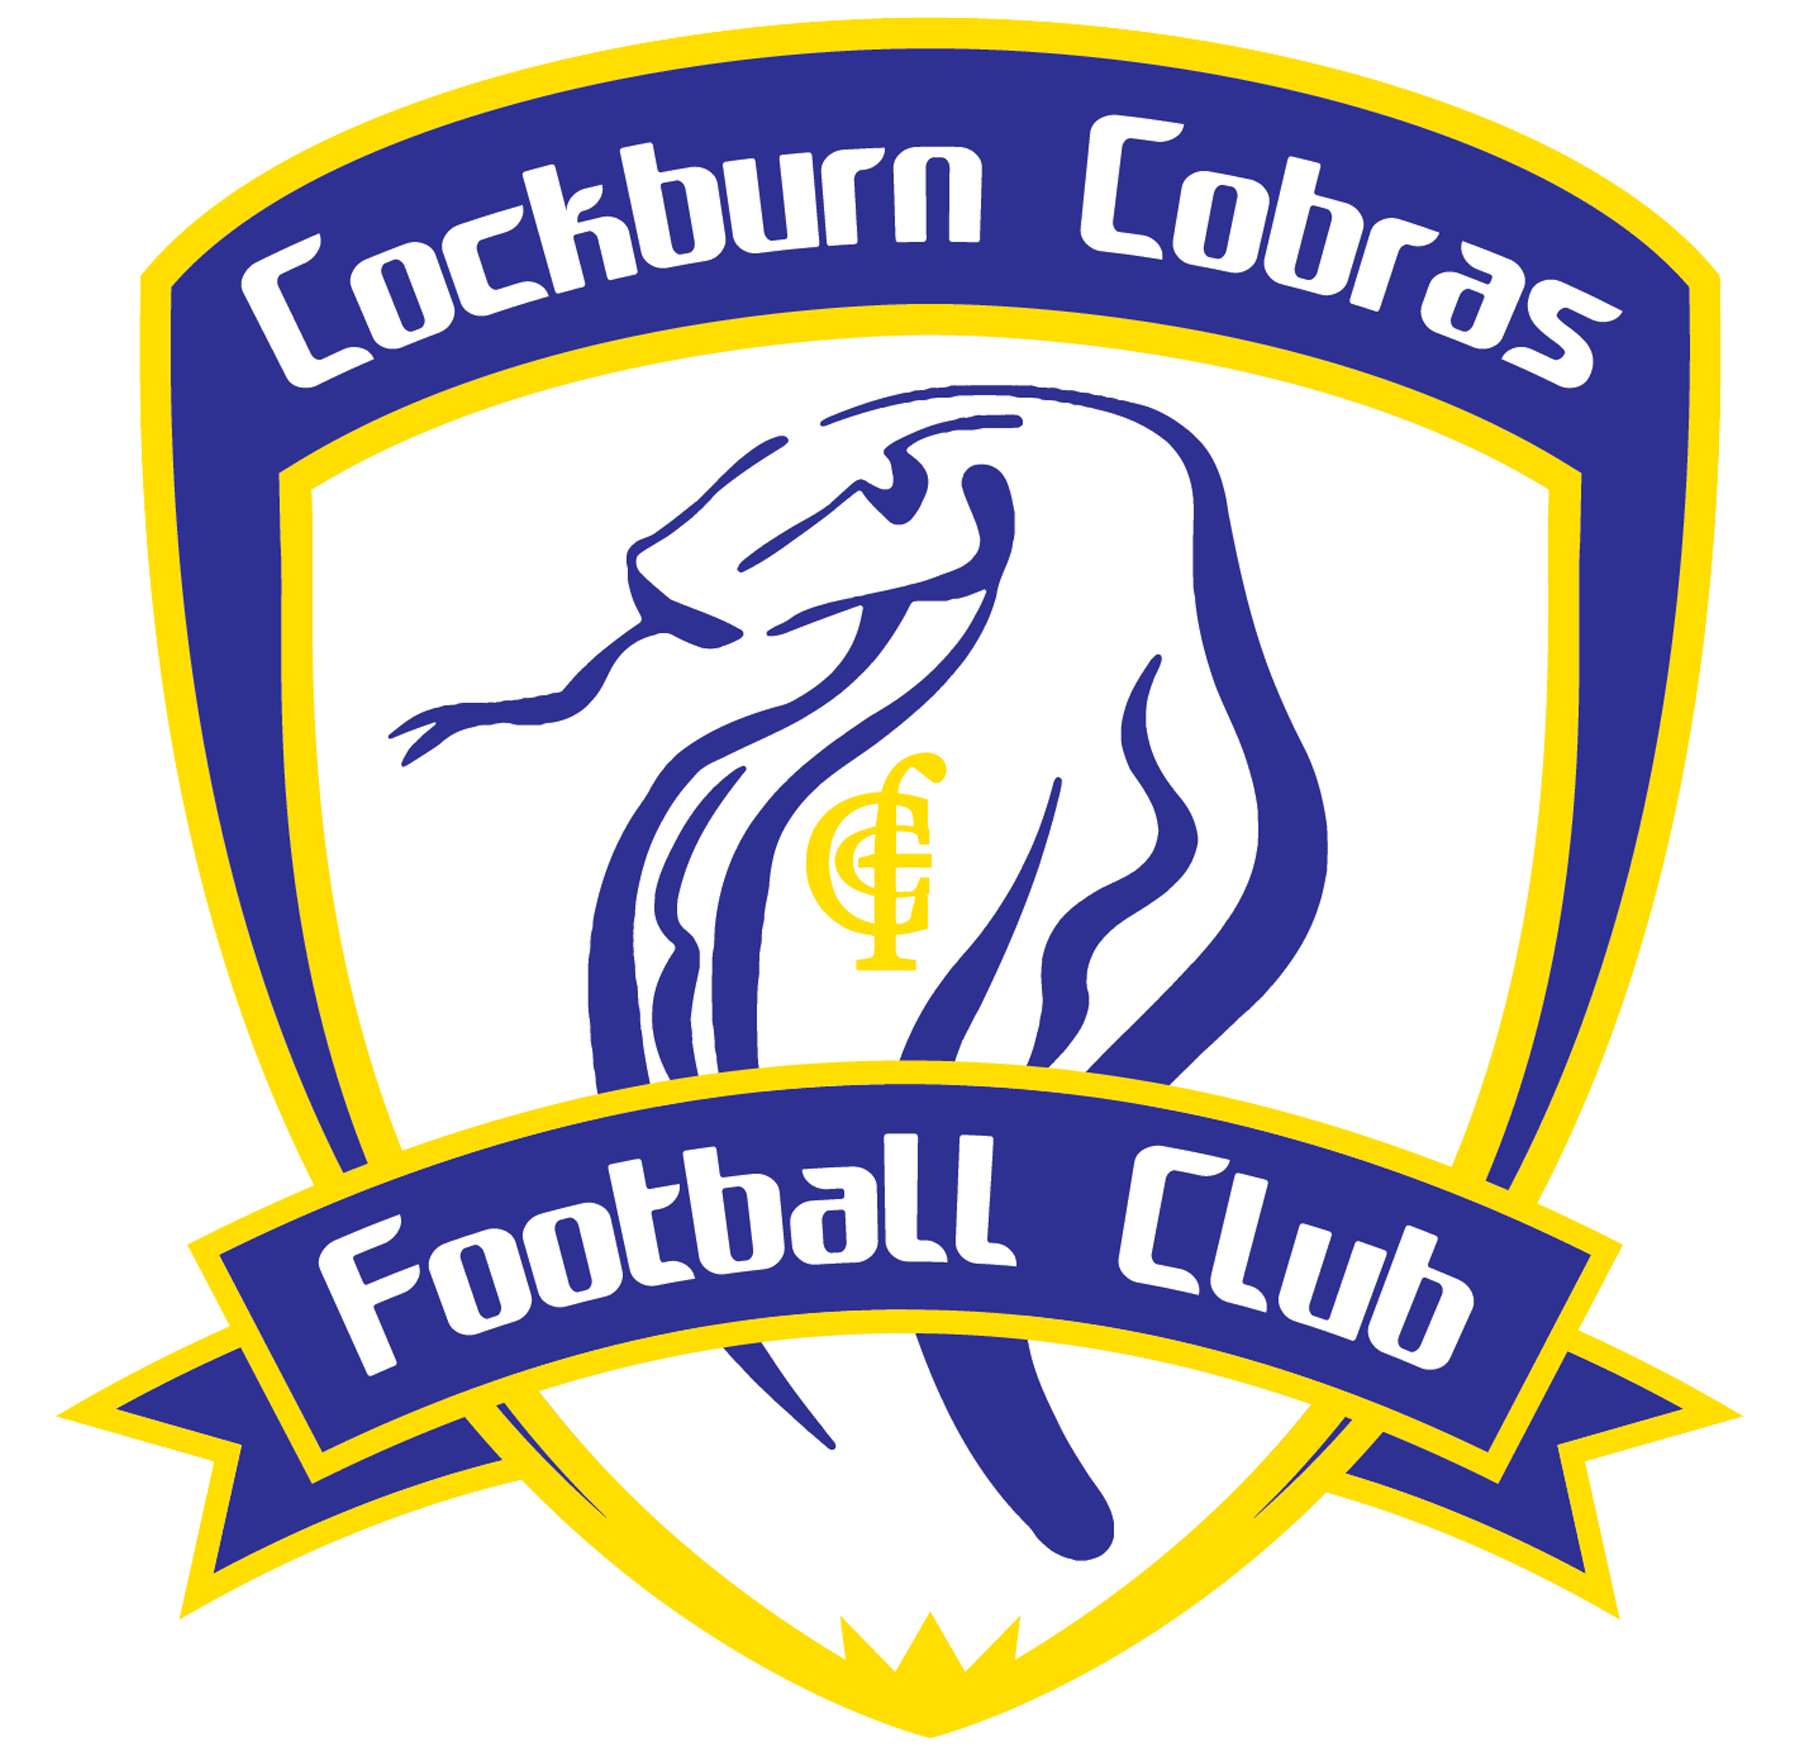 Cockburn Cobras Football Club